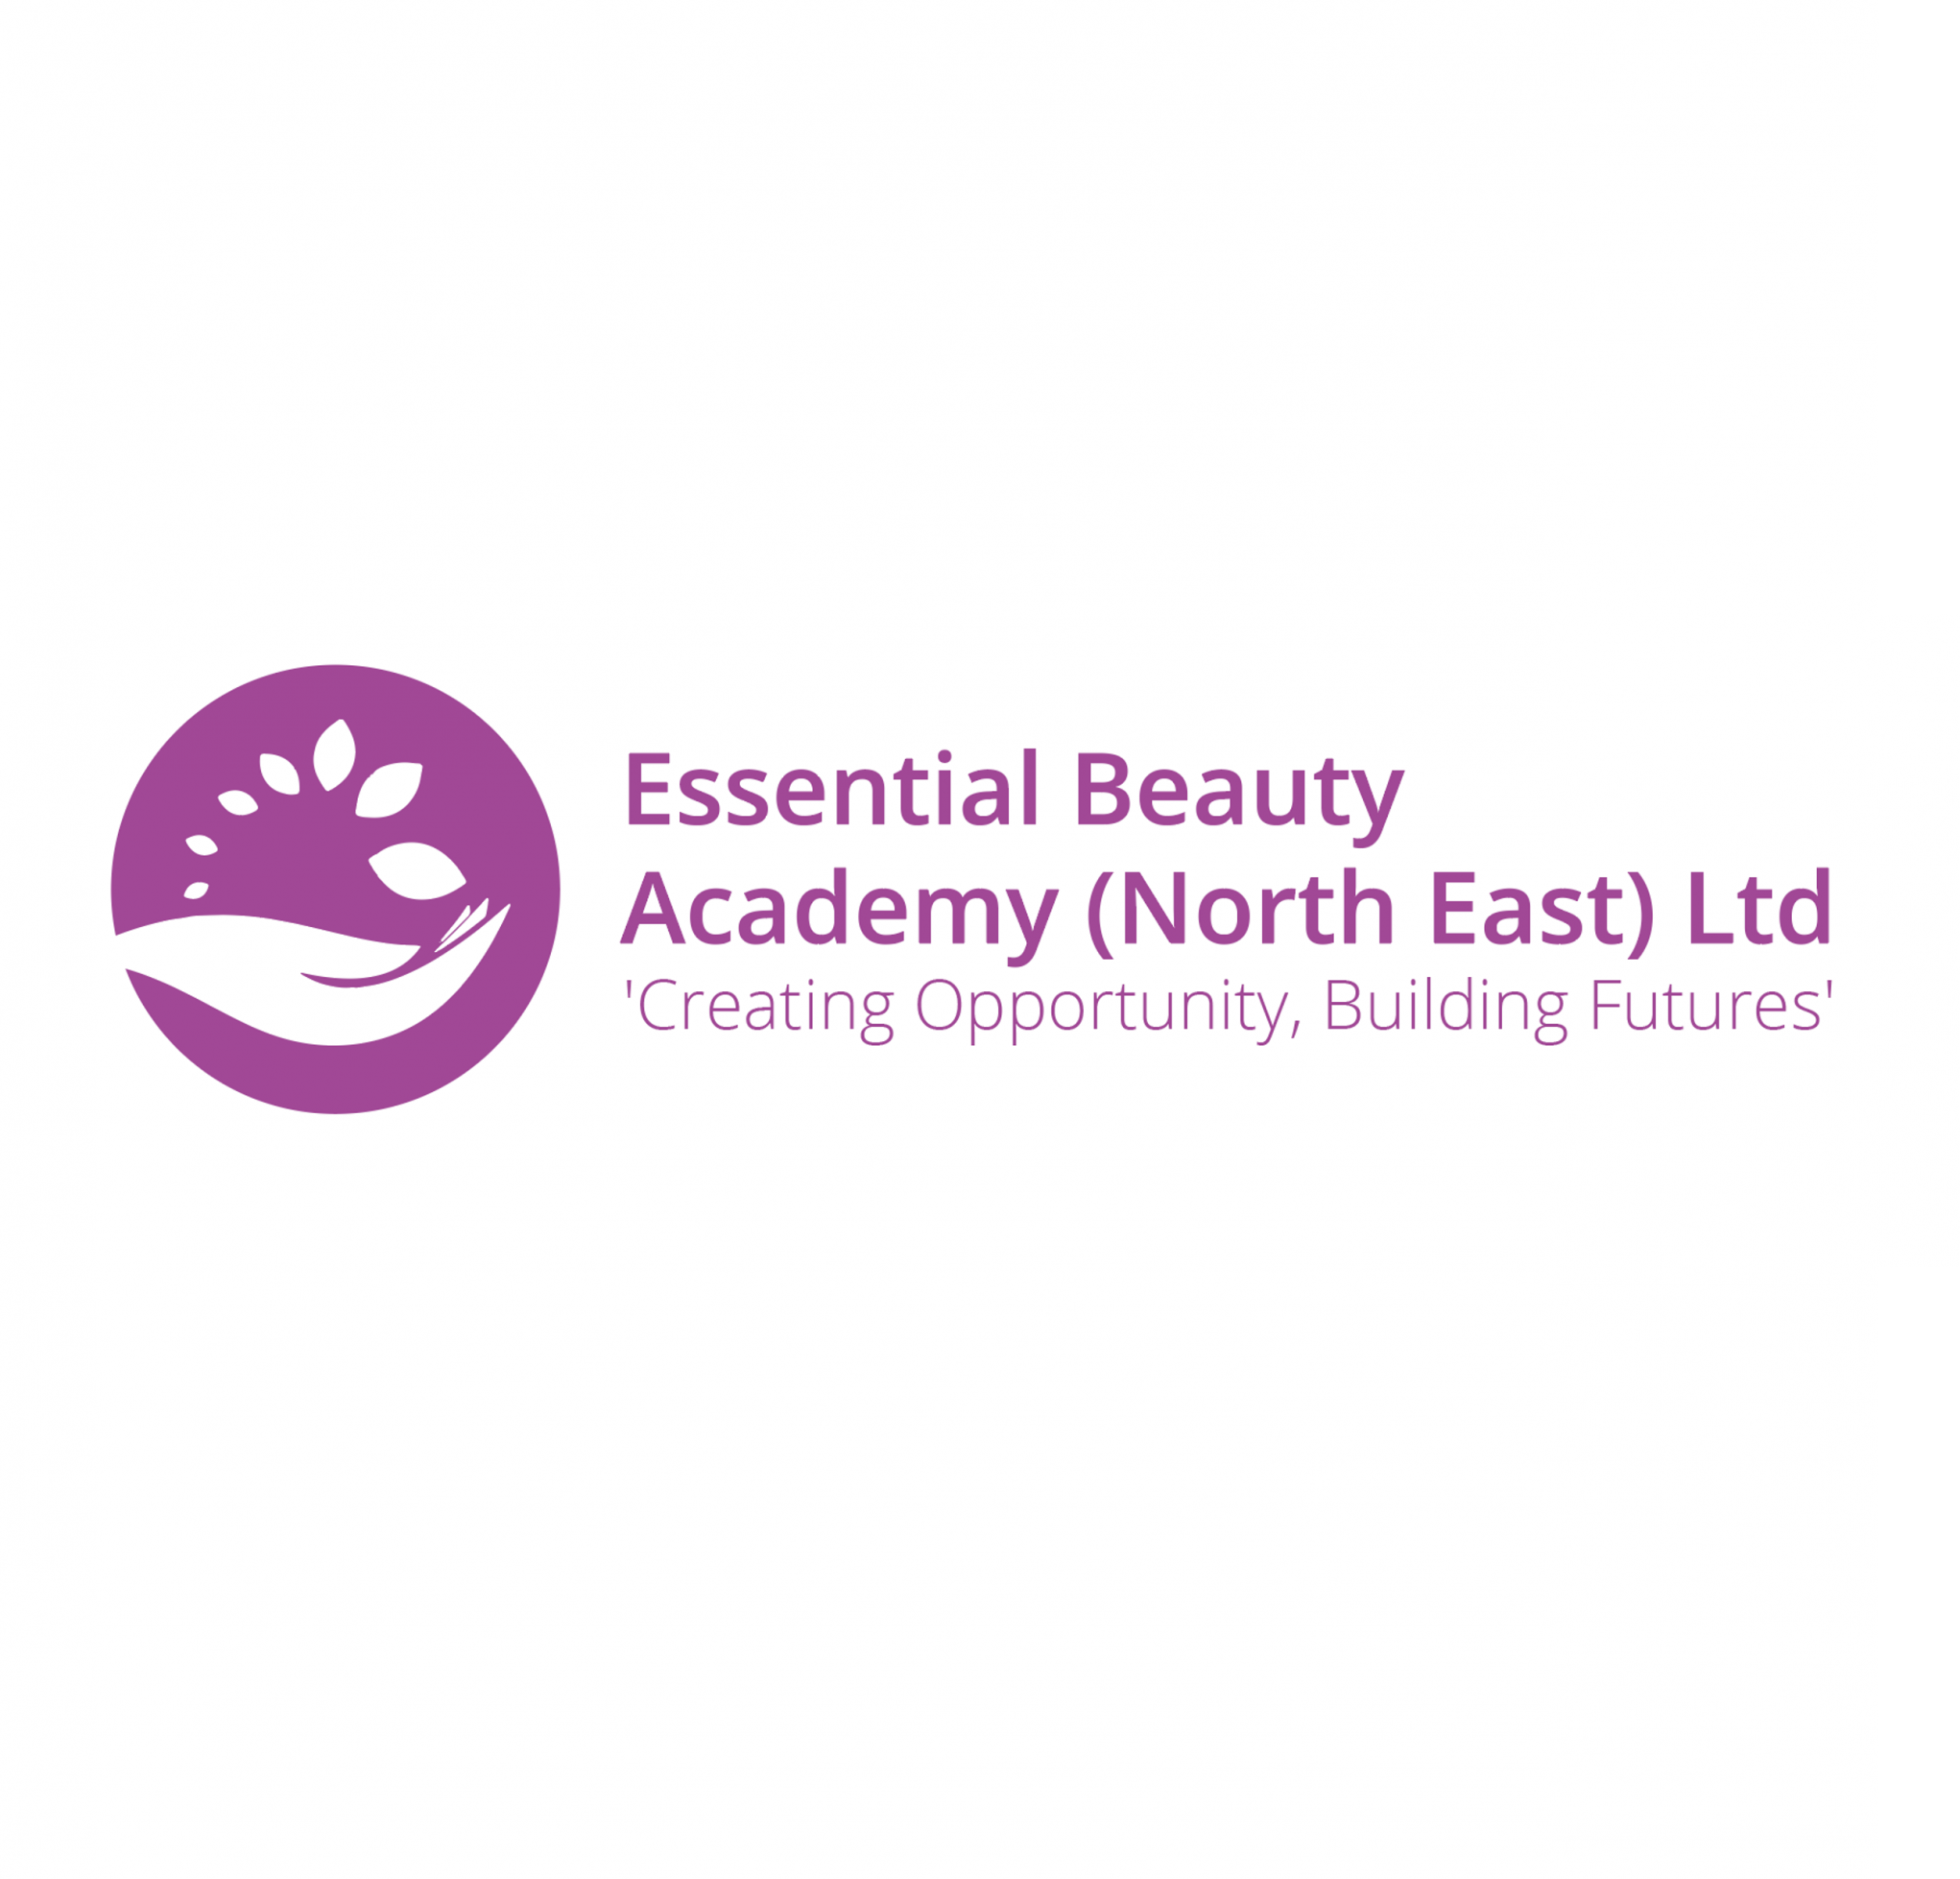 Essential Beauty Academy Ltd